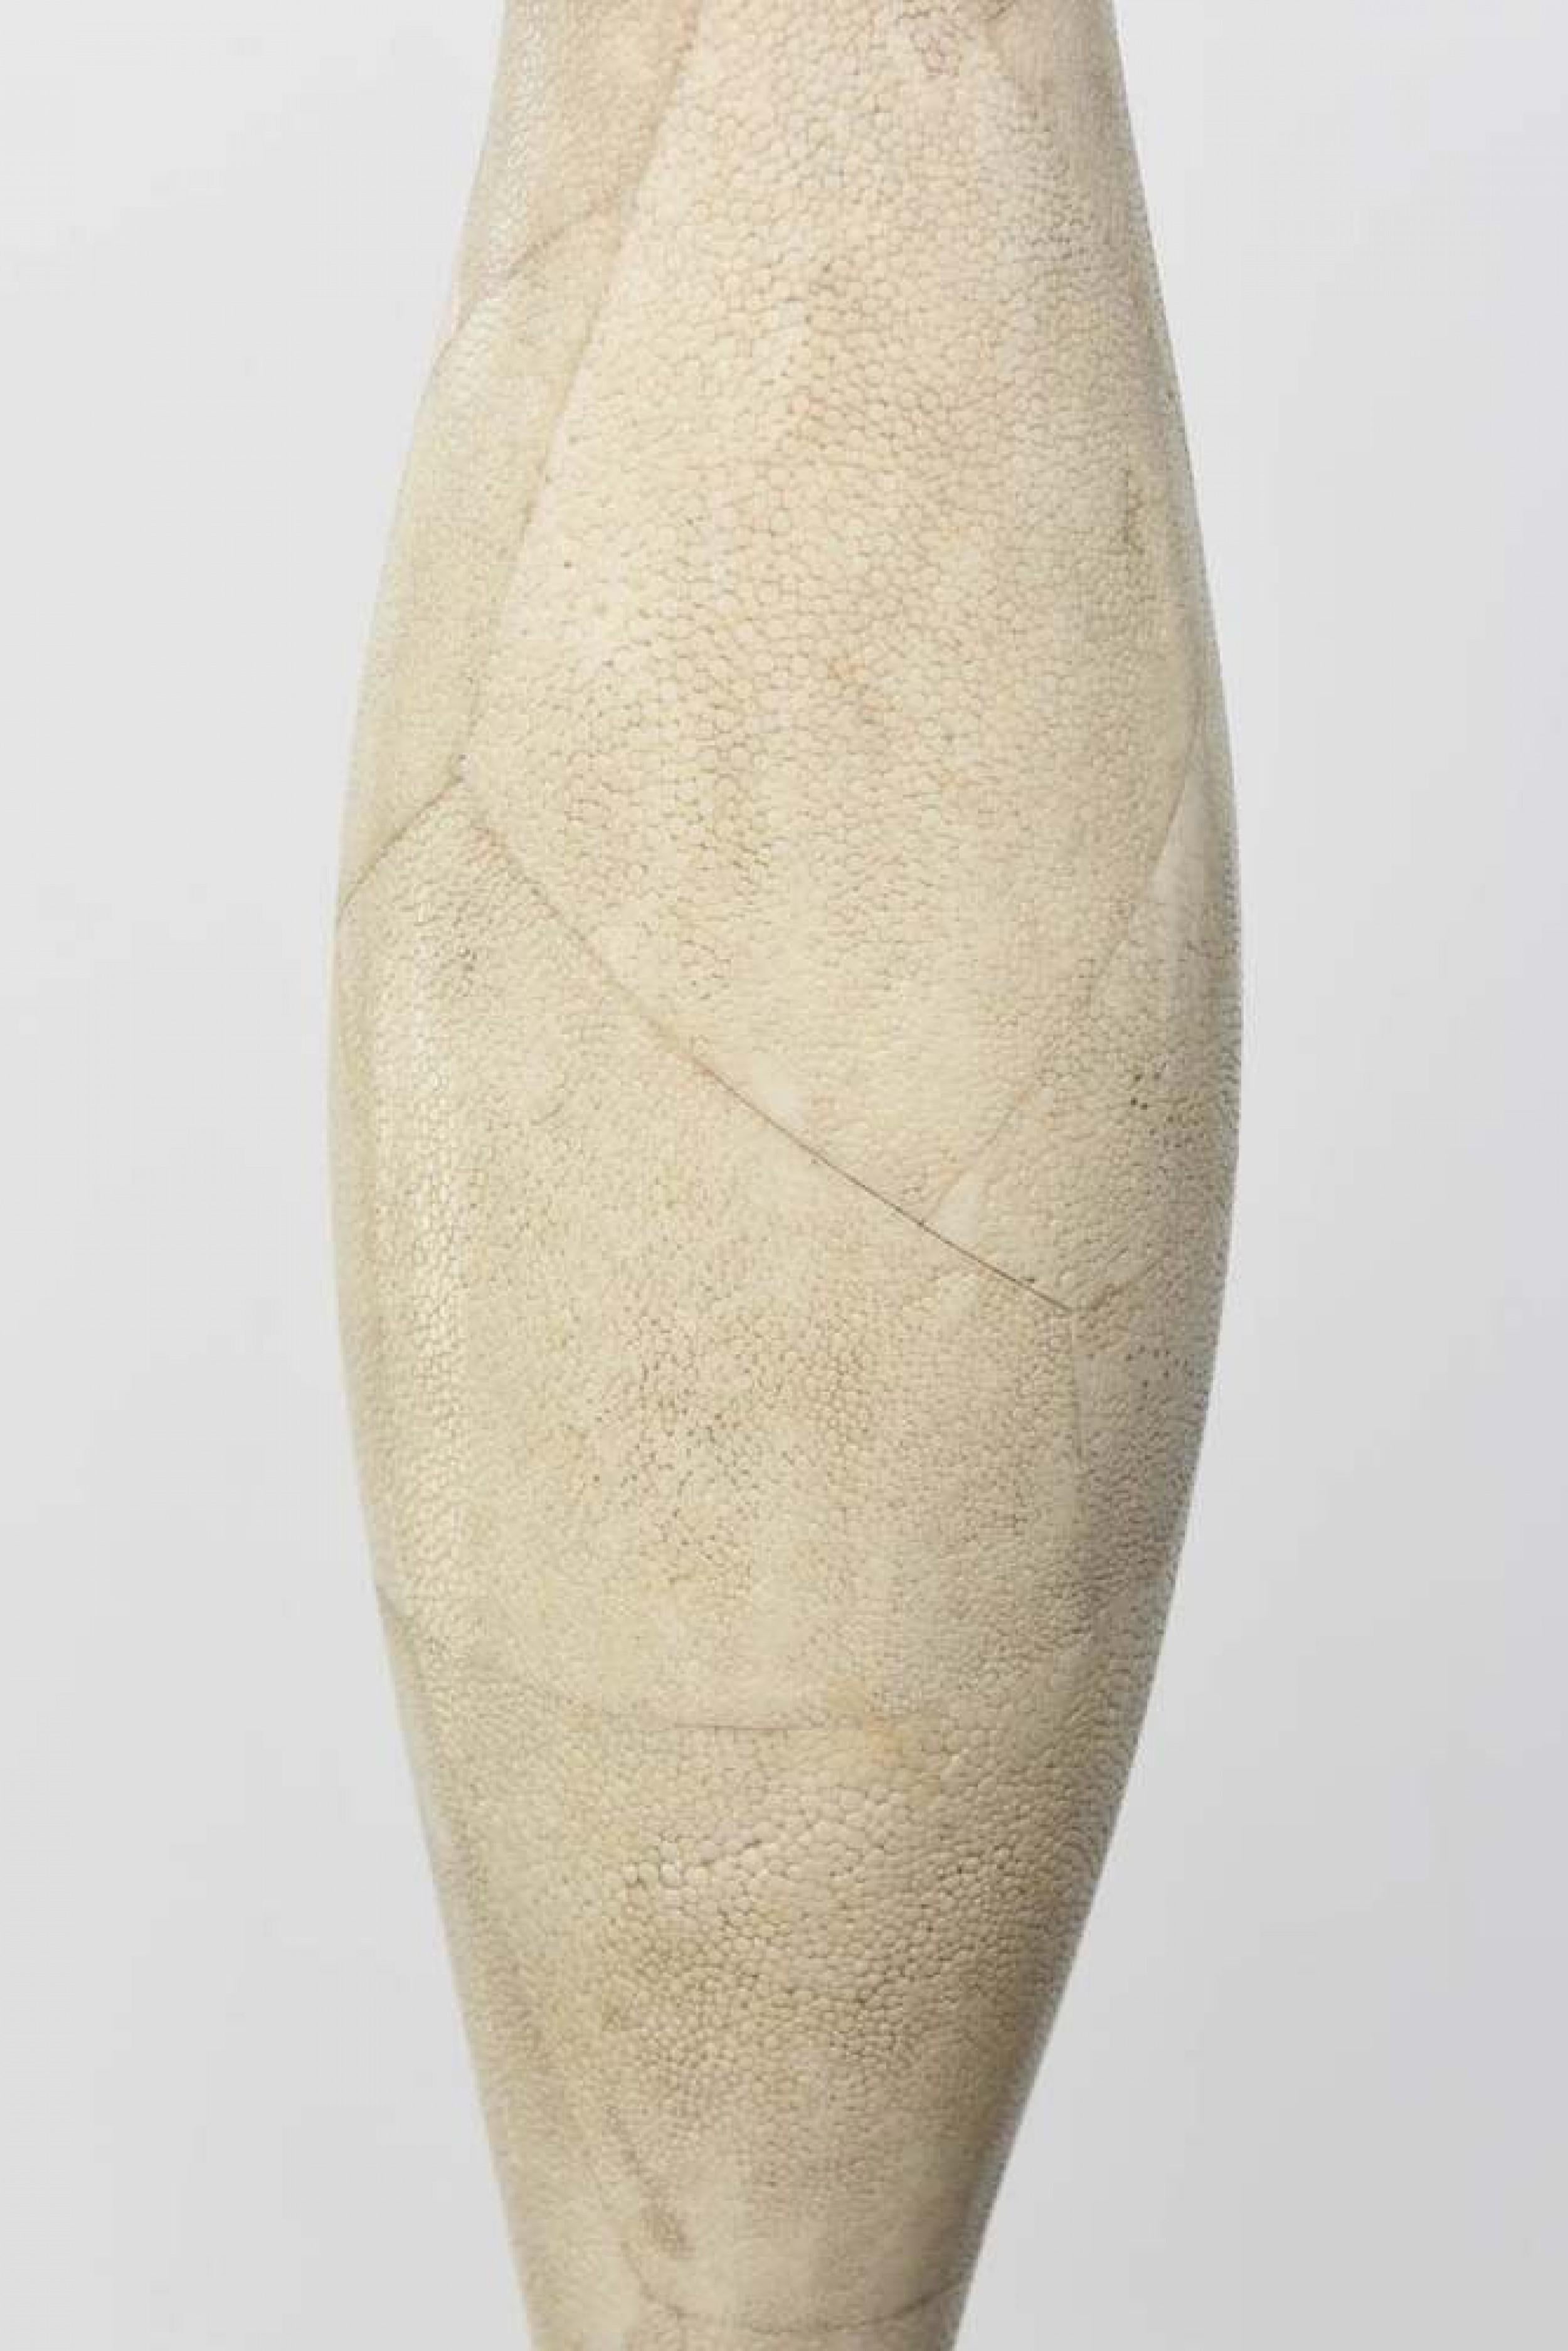 20th Century R&Y Augousti Midcentury Continental Modern Large Shagreen Vase For Sale